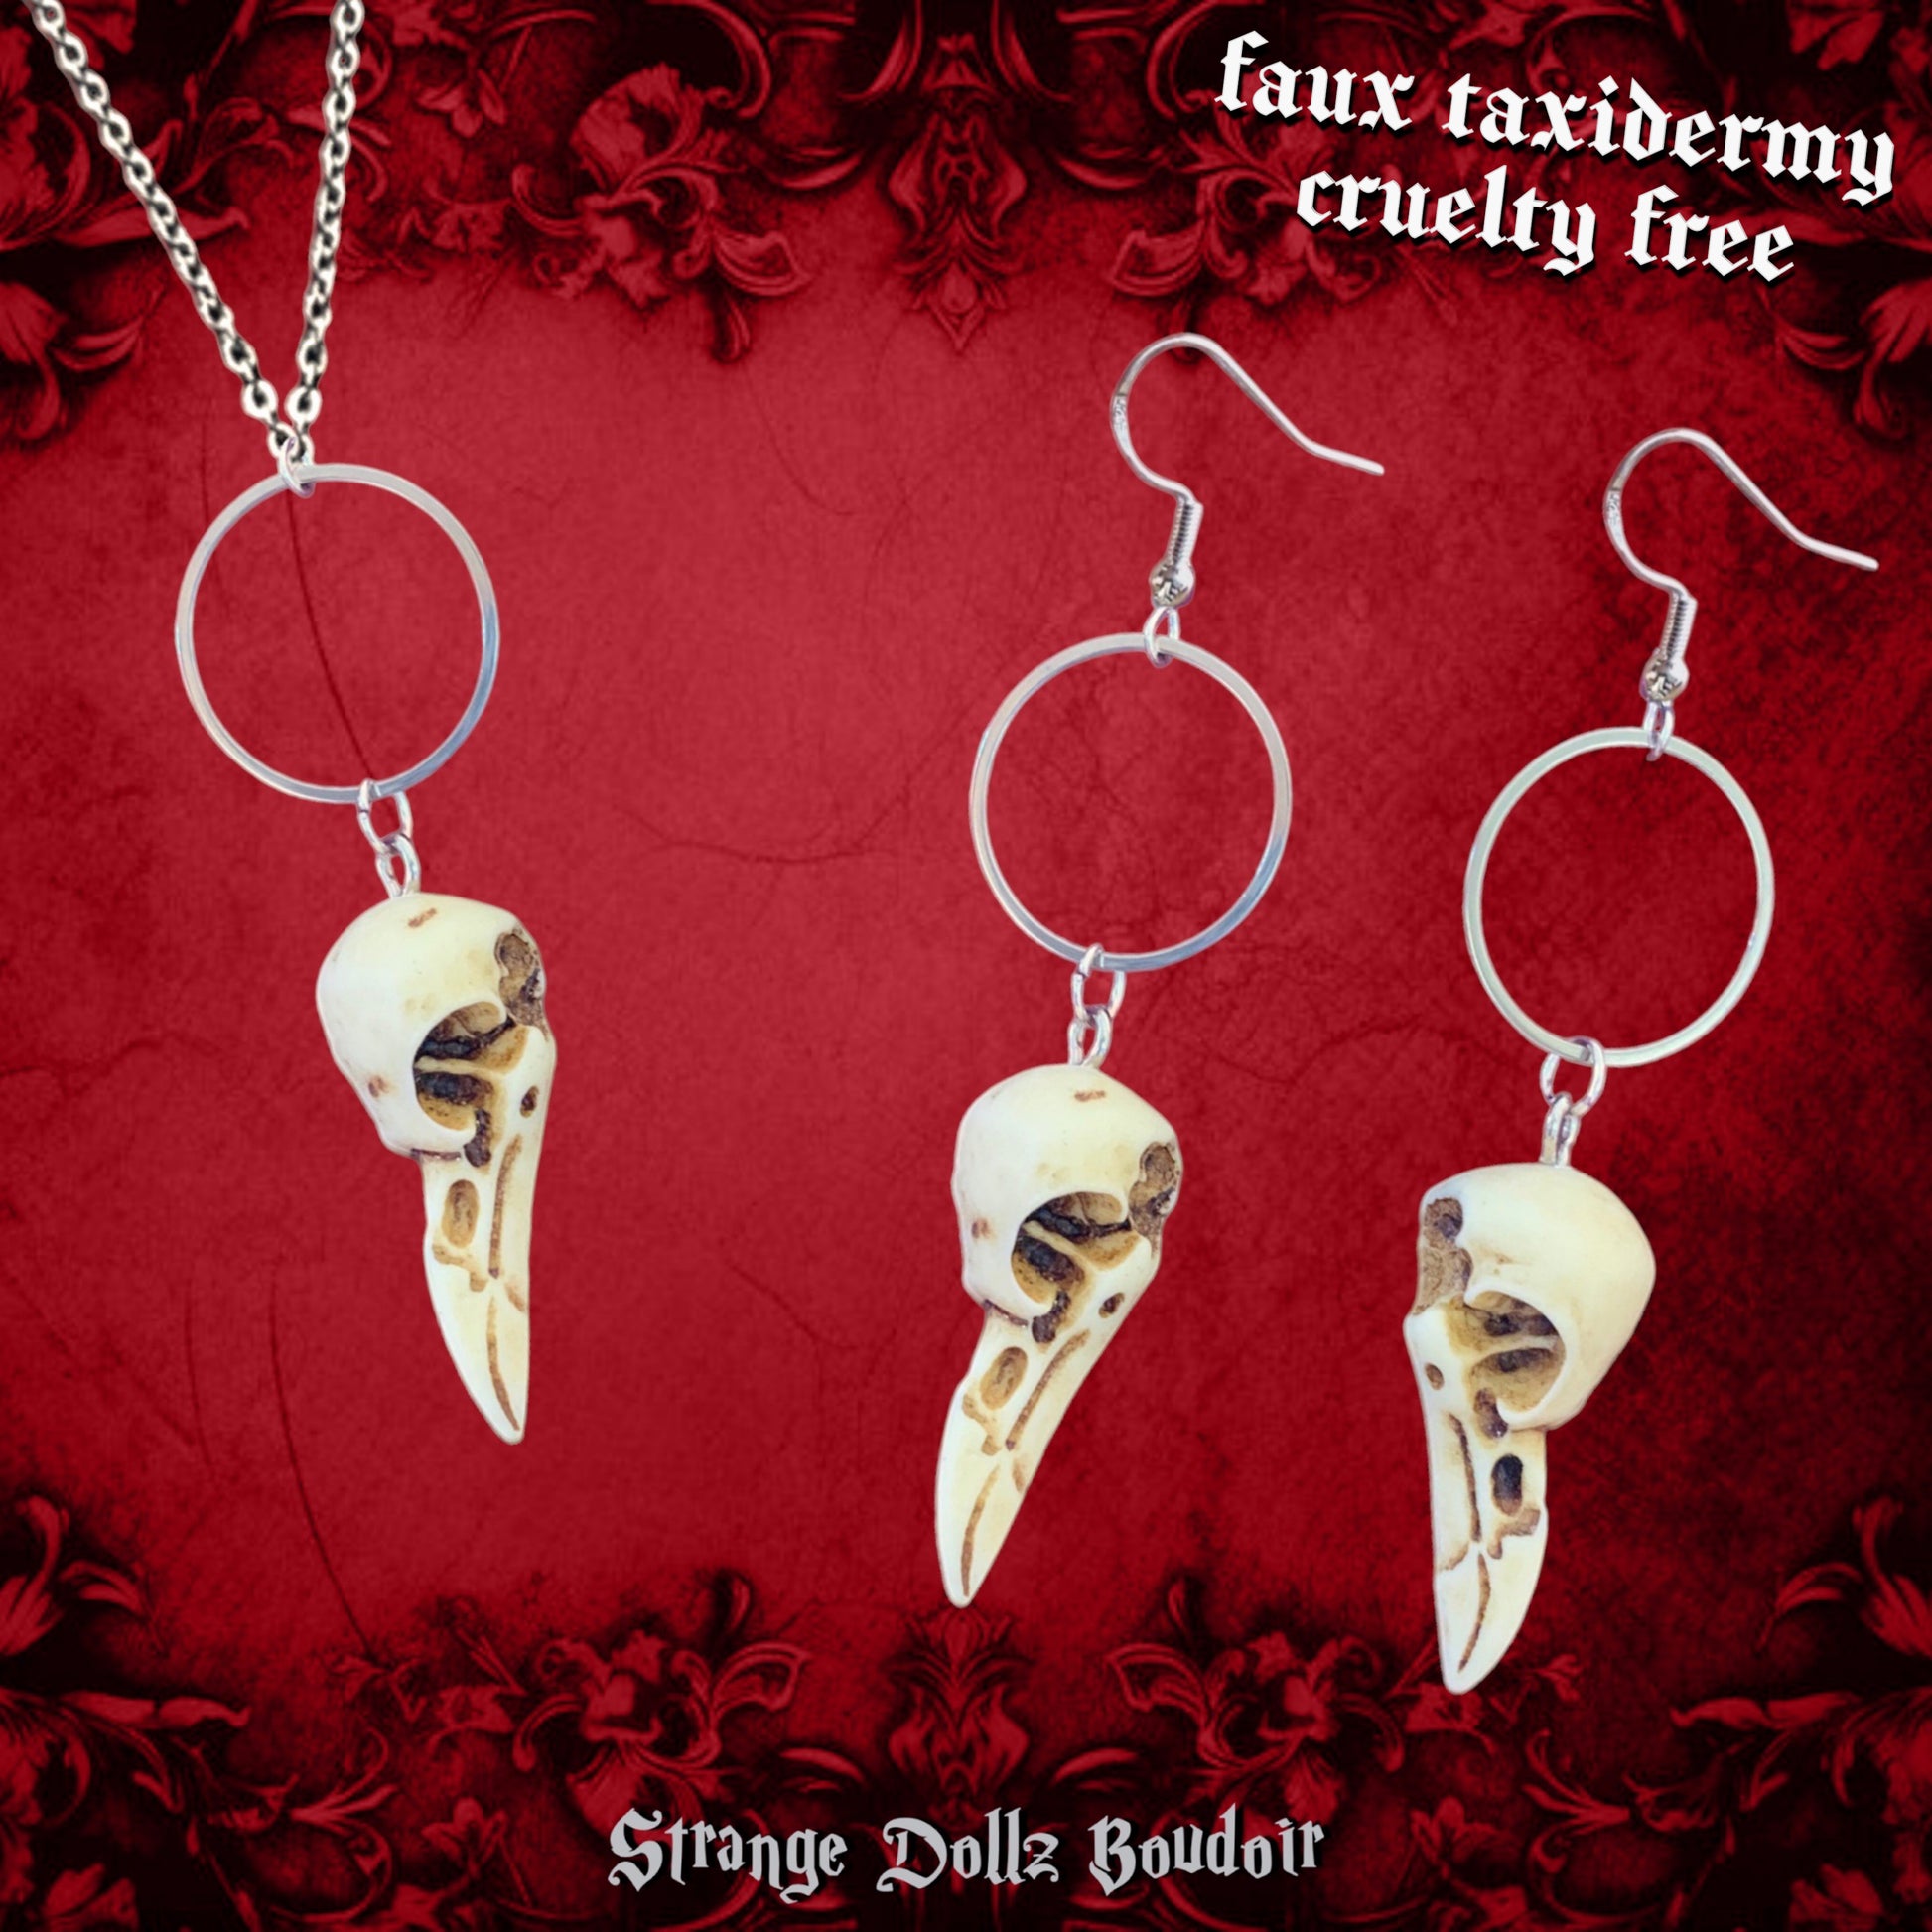 Raven skull jewellery, faux taxidermy, resin skulls, Strange Dollz Boudoir